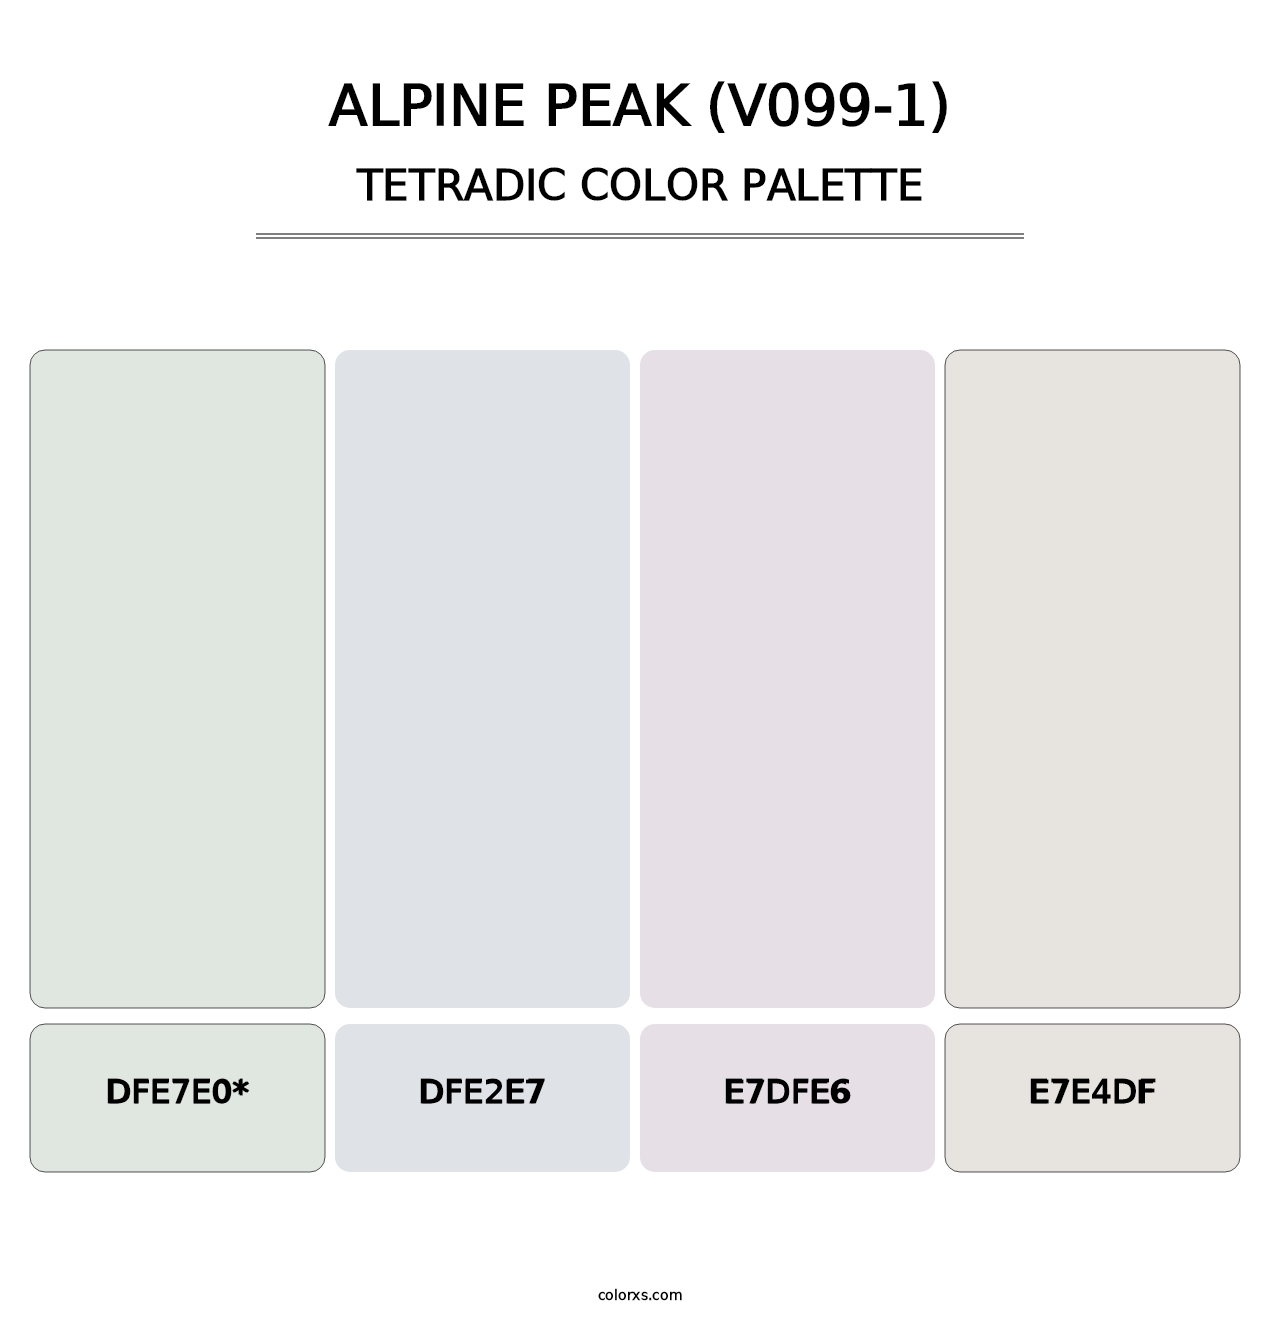 Alpine Peak (V099-1) - Tetradic Color Palette